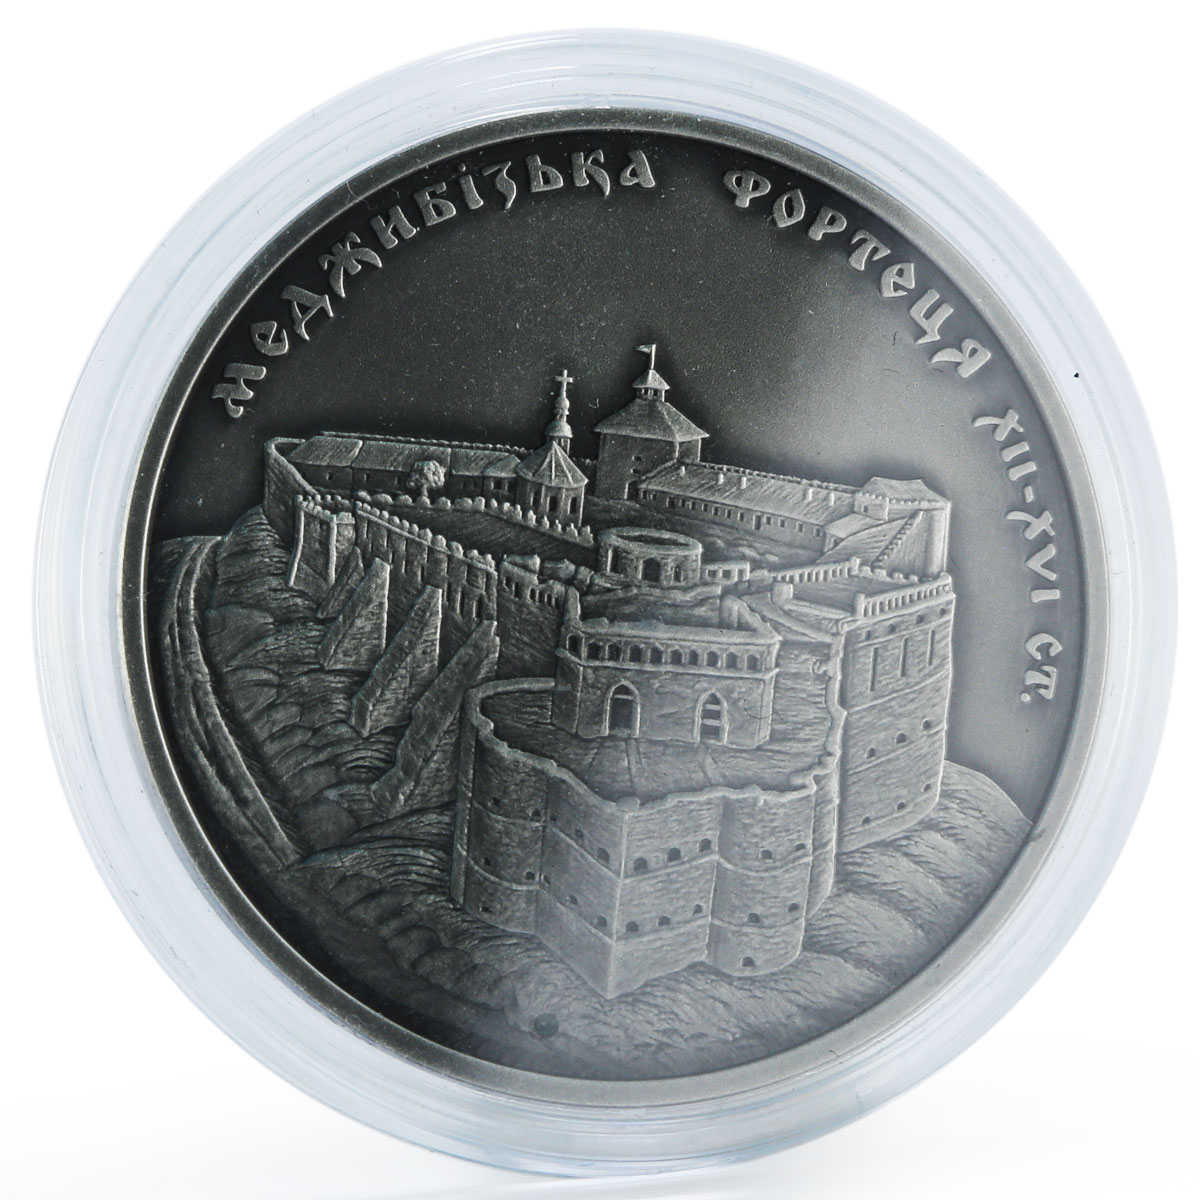 Ukraine 10 hryvnia Medzhybizh Fortress Castle silver coin 2018